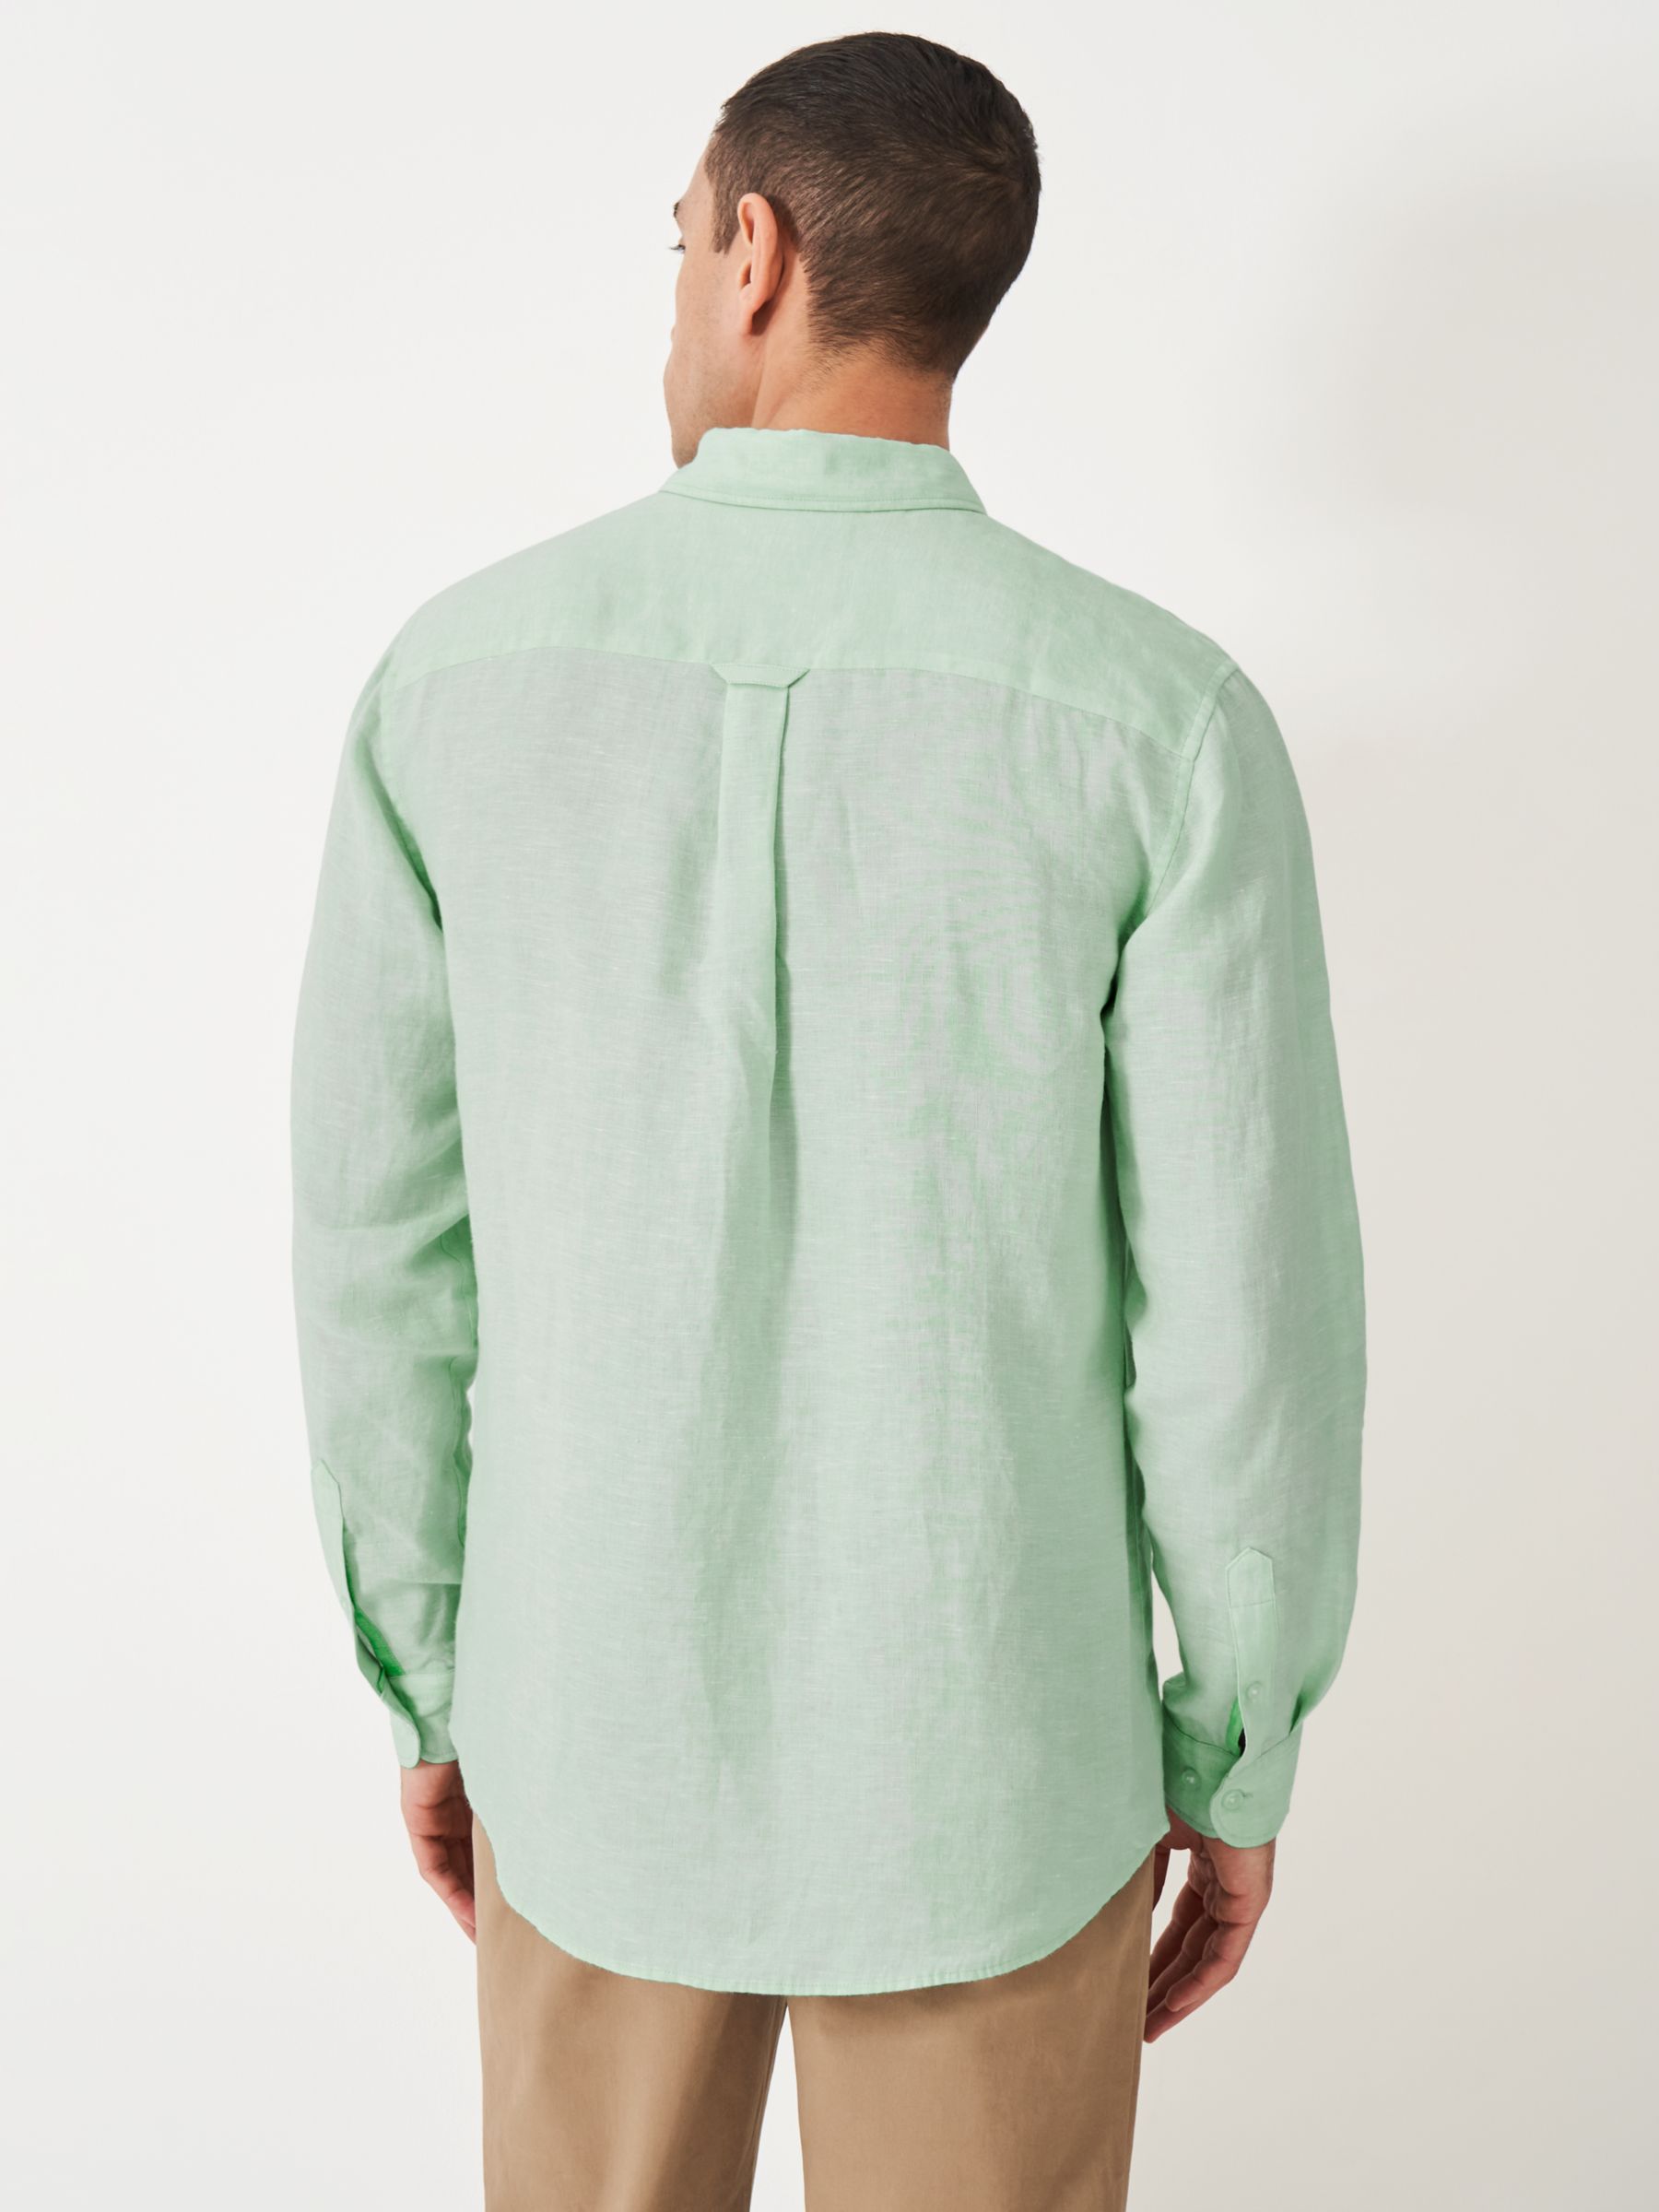 Crew Clothing Long Sleeve Linen Classic Shirt, Mint Green, L